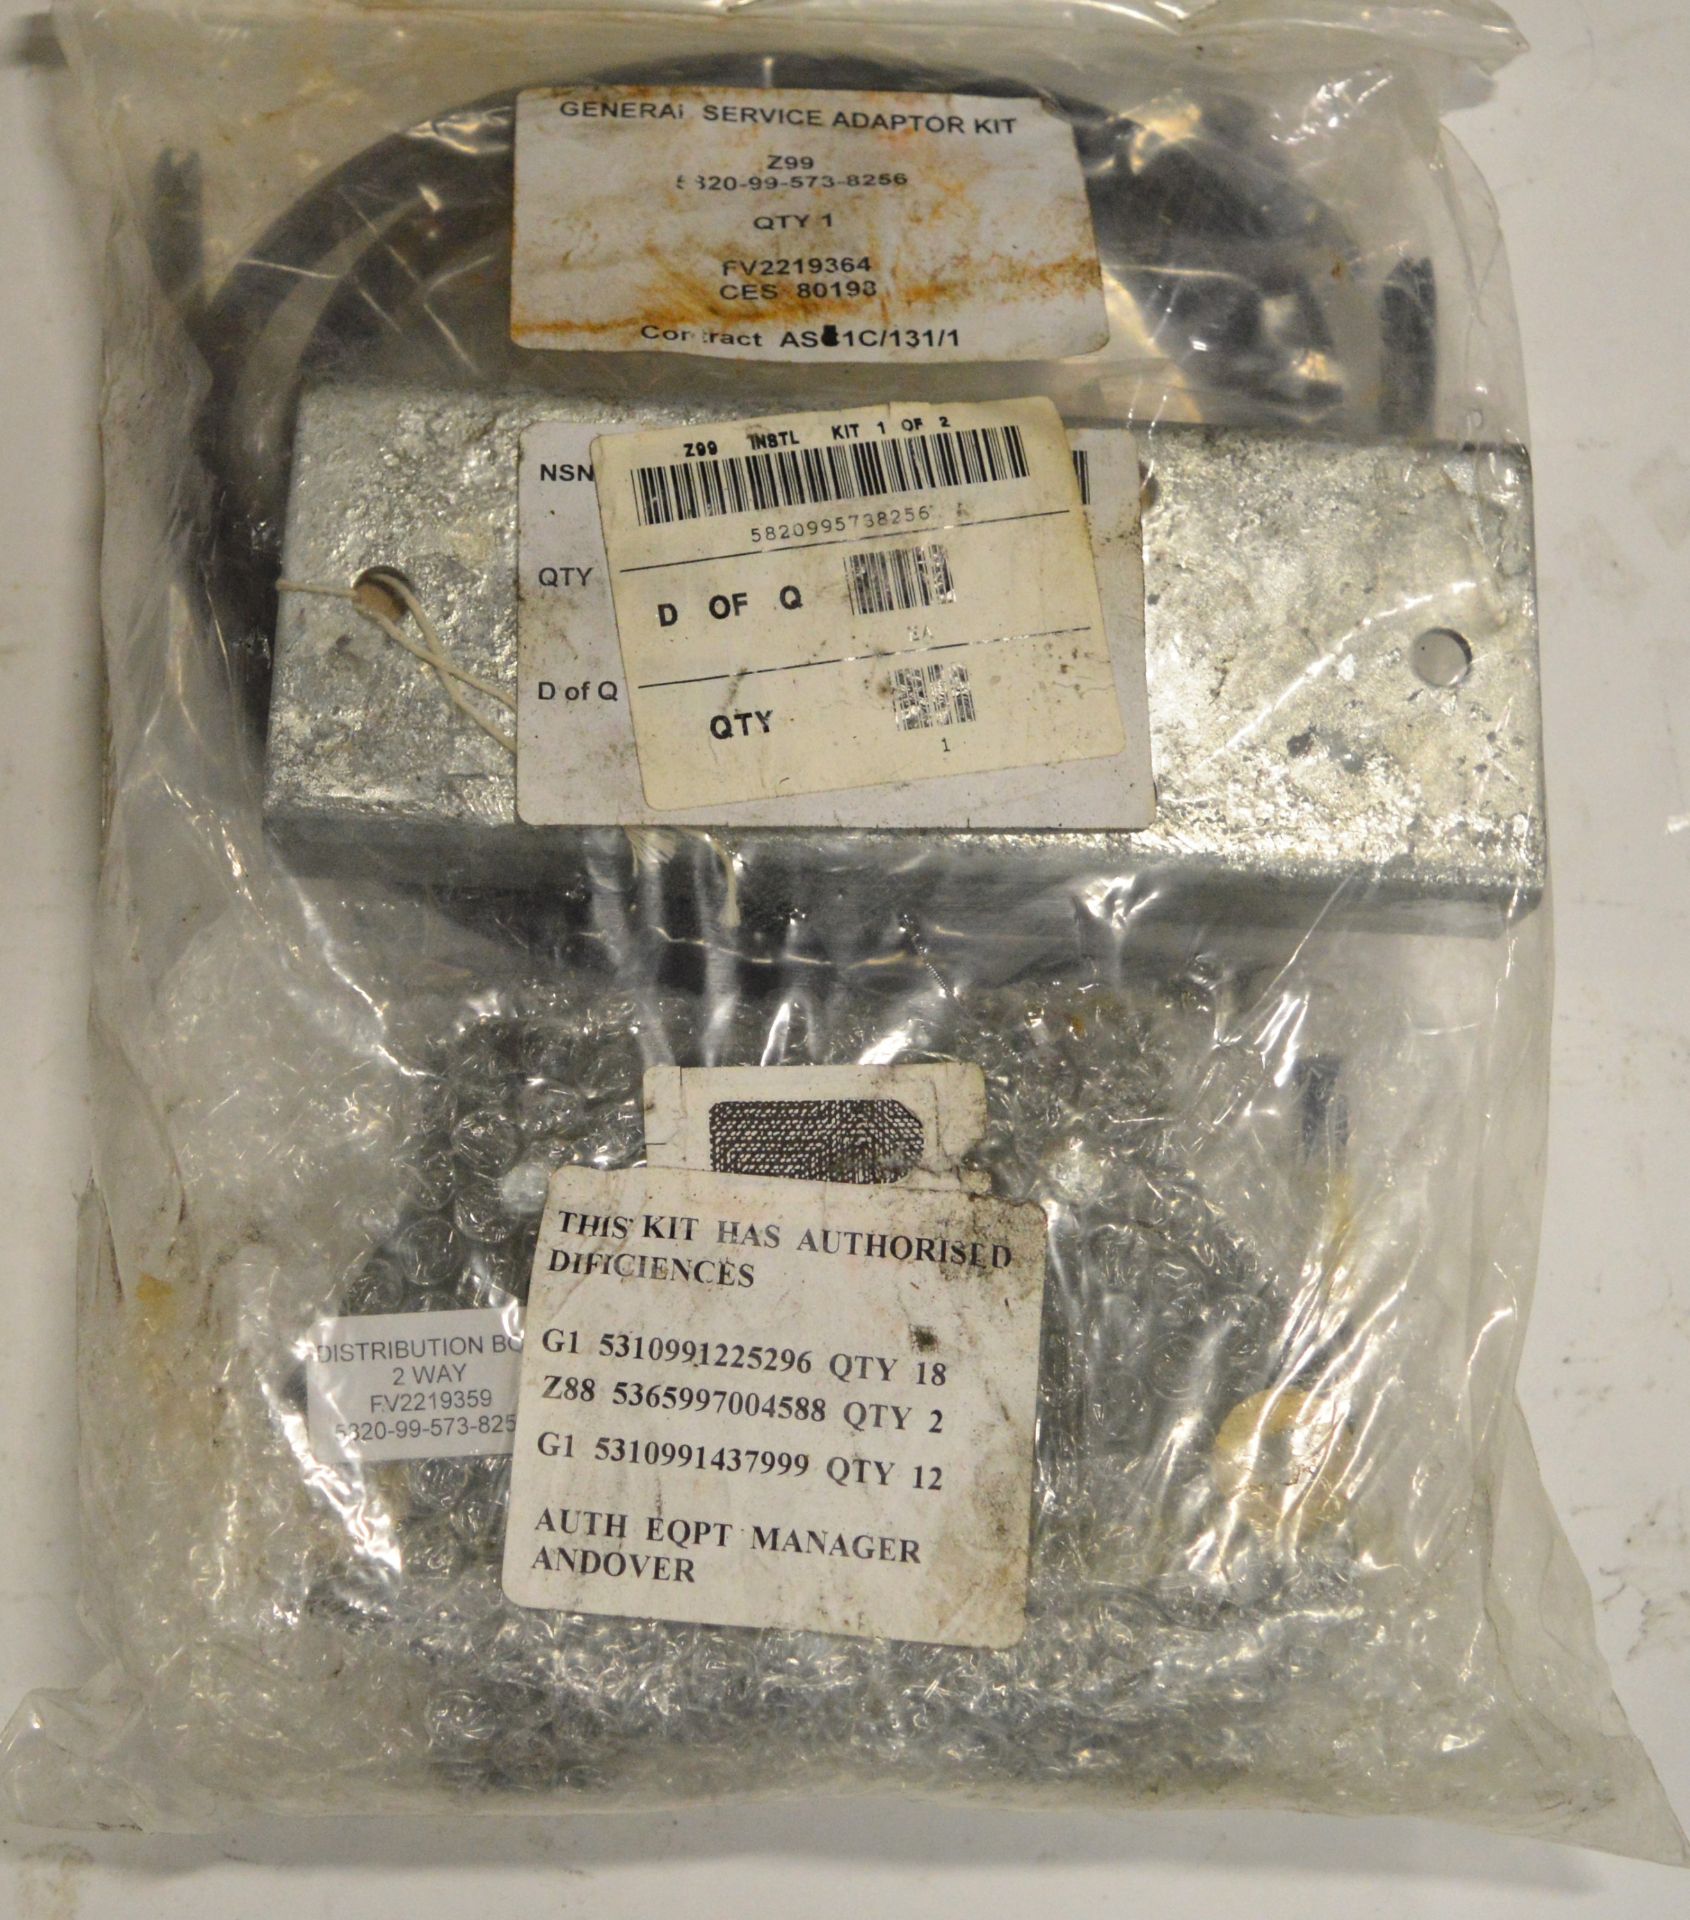 5x General Service Adaptor Kits NSN 5820995738256. - Image 2 of 2